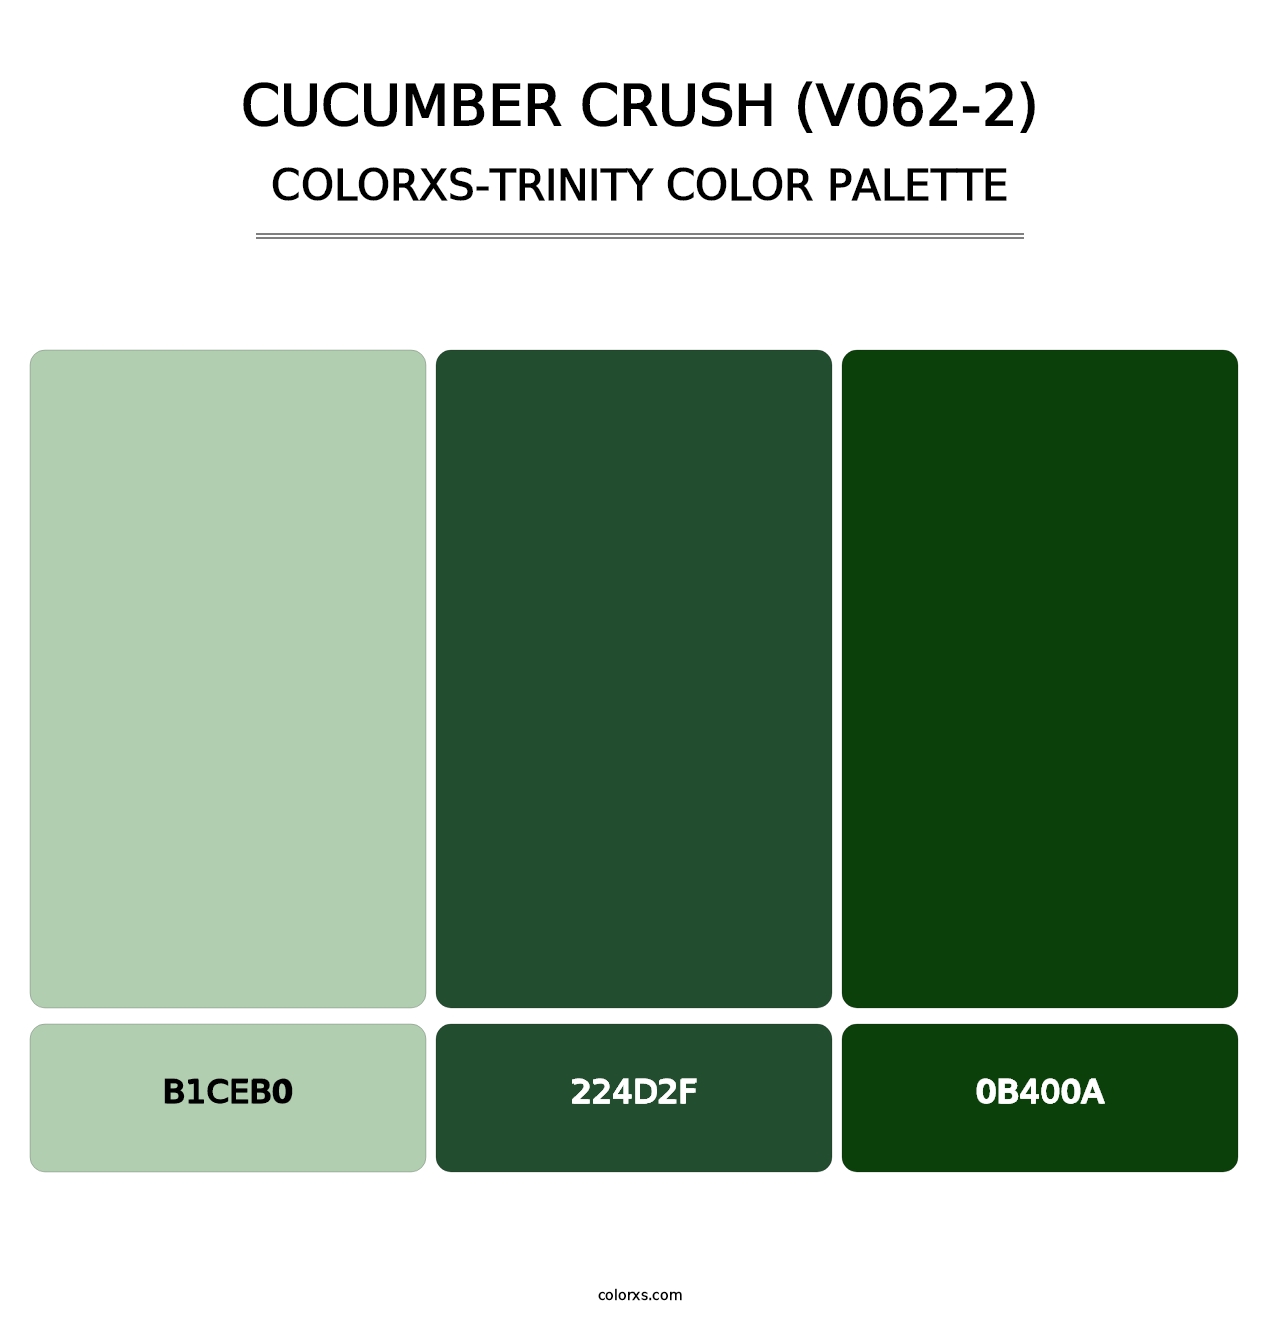 Cucumber Crush (V062-2) - Colorxs Trinity Palette